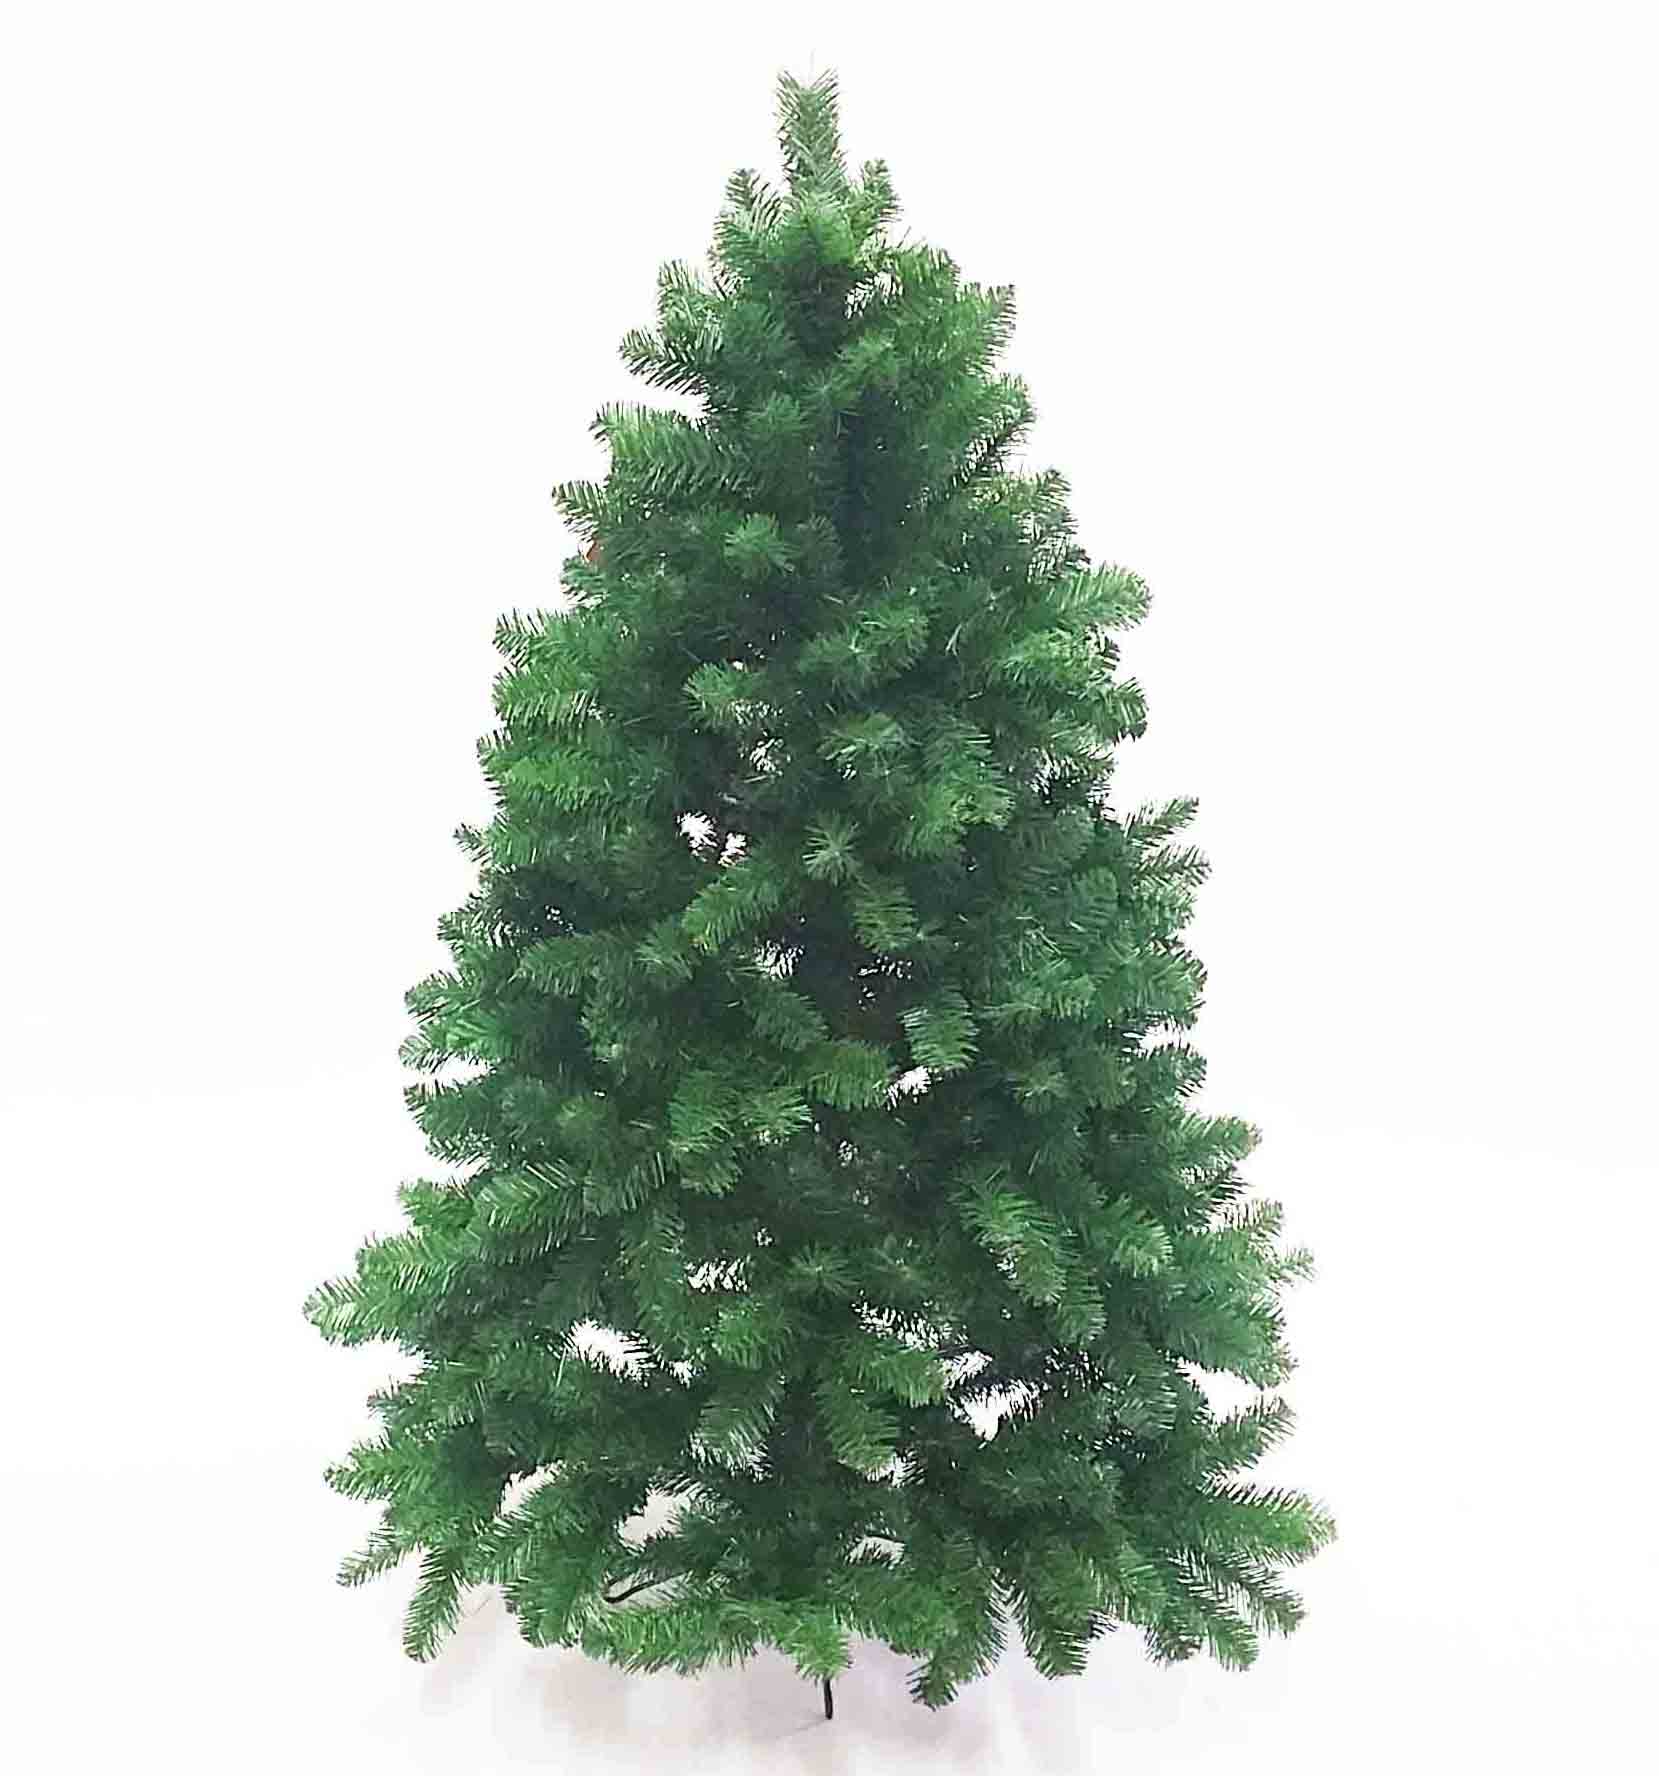 XT75G - 7.5' Green Pine Tree - 279.75 ea